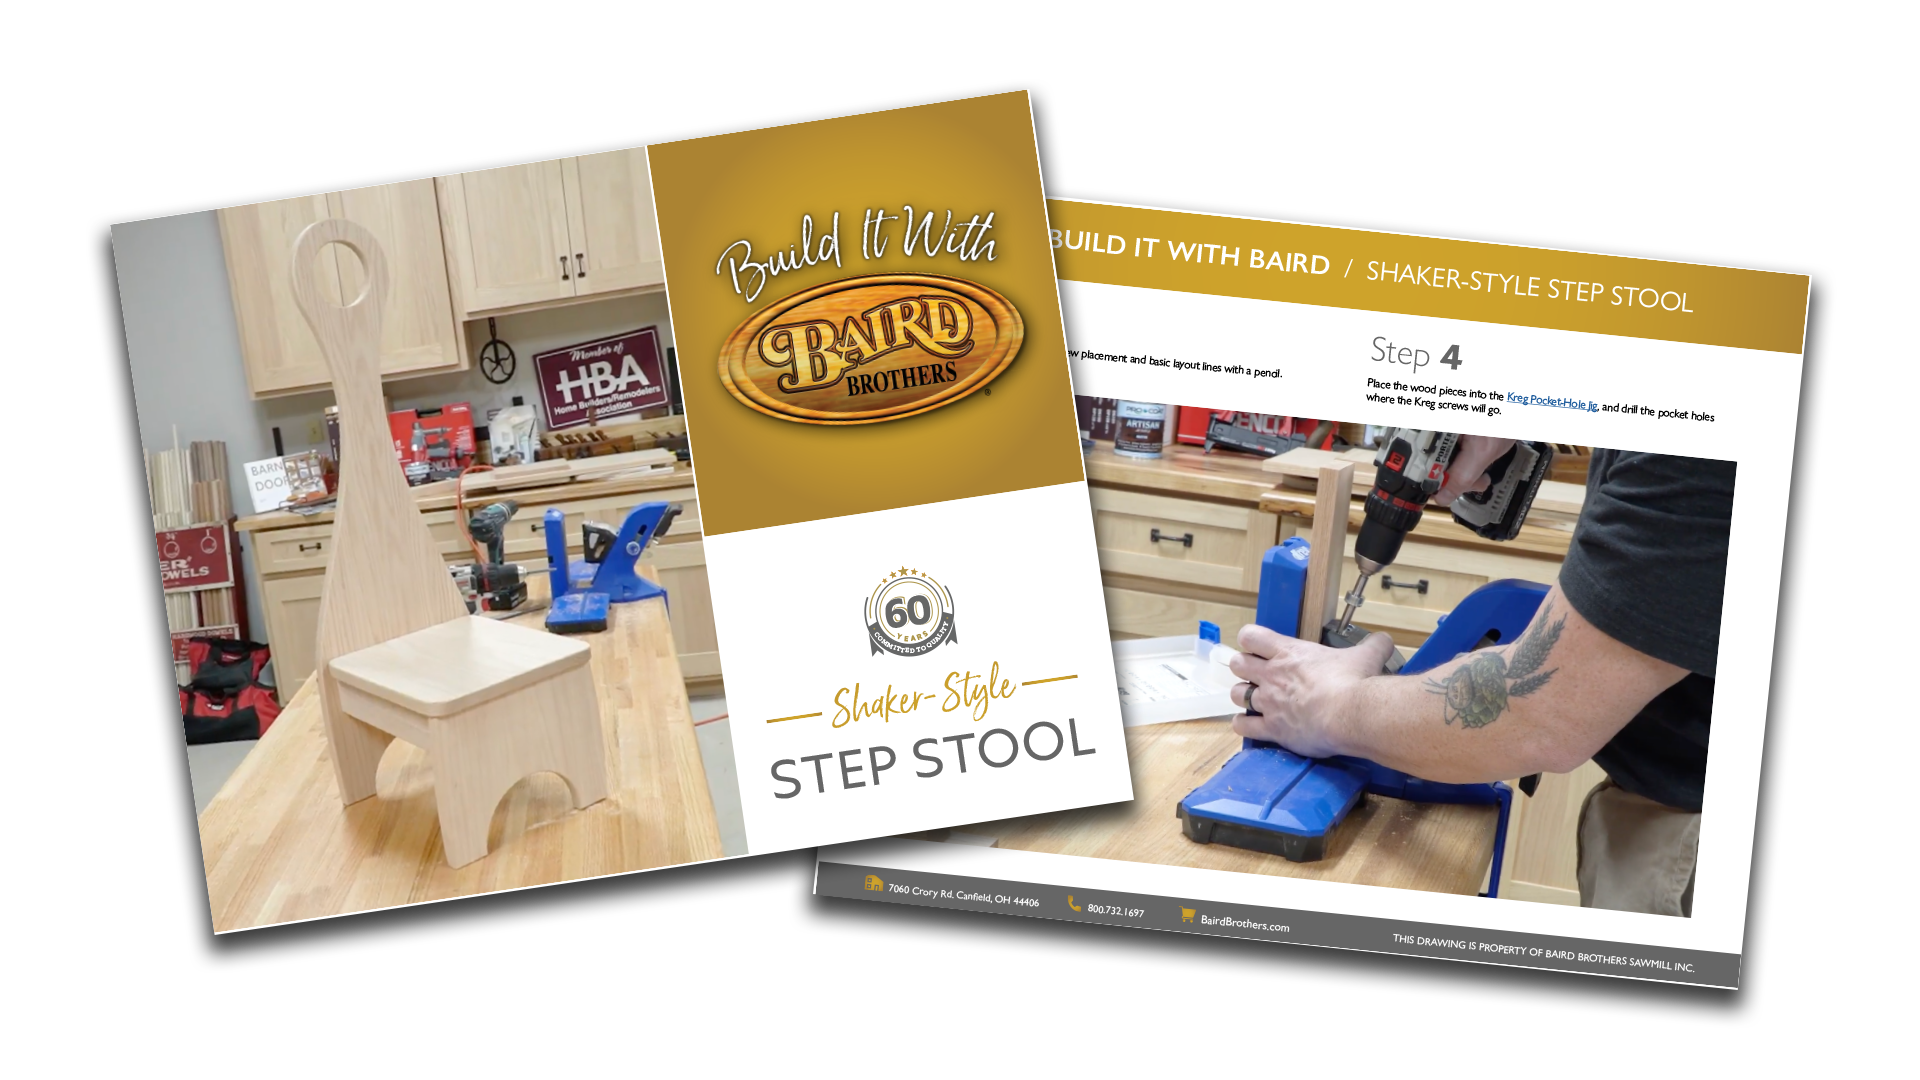 Shaker style step stool instructions.